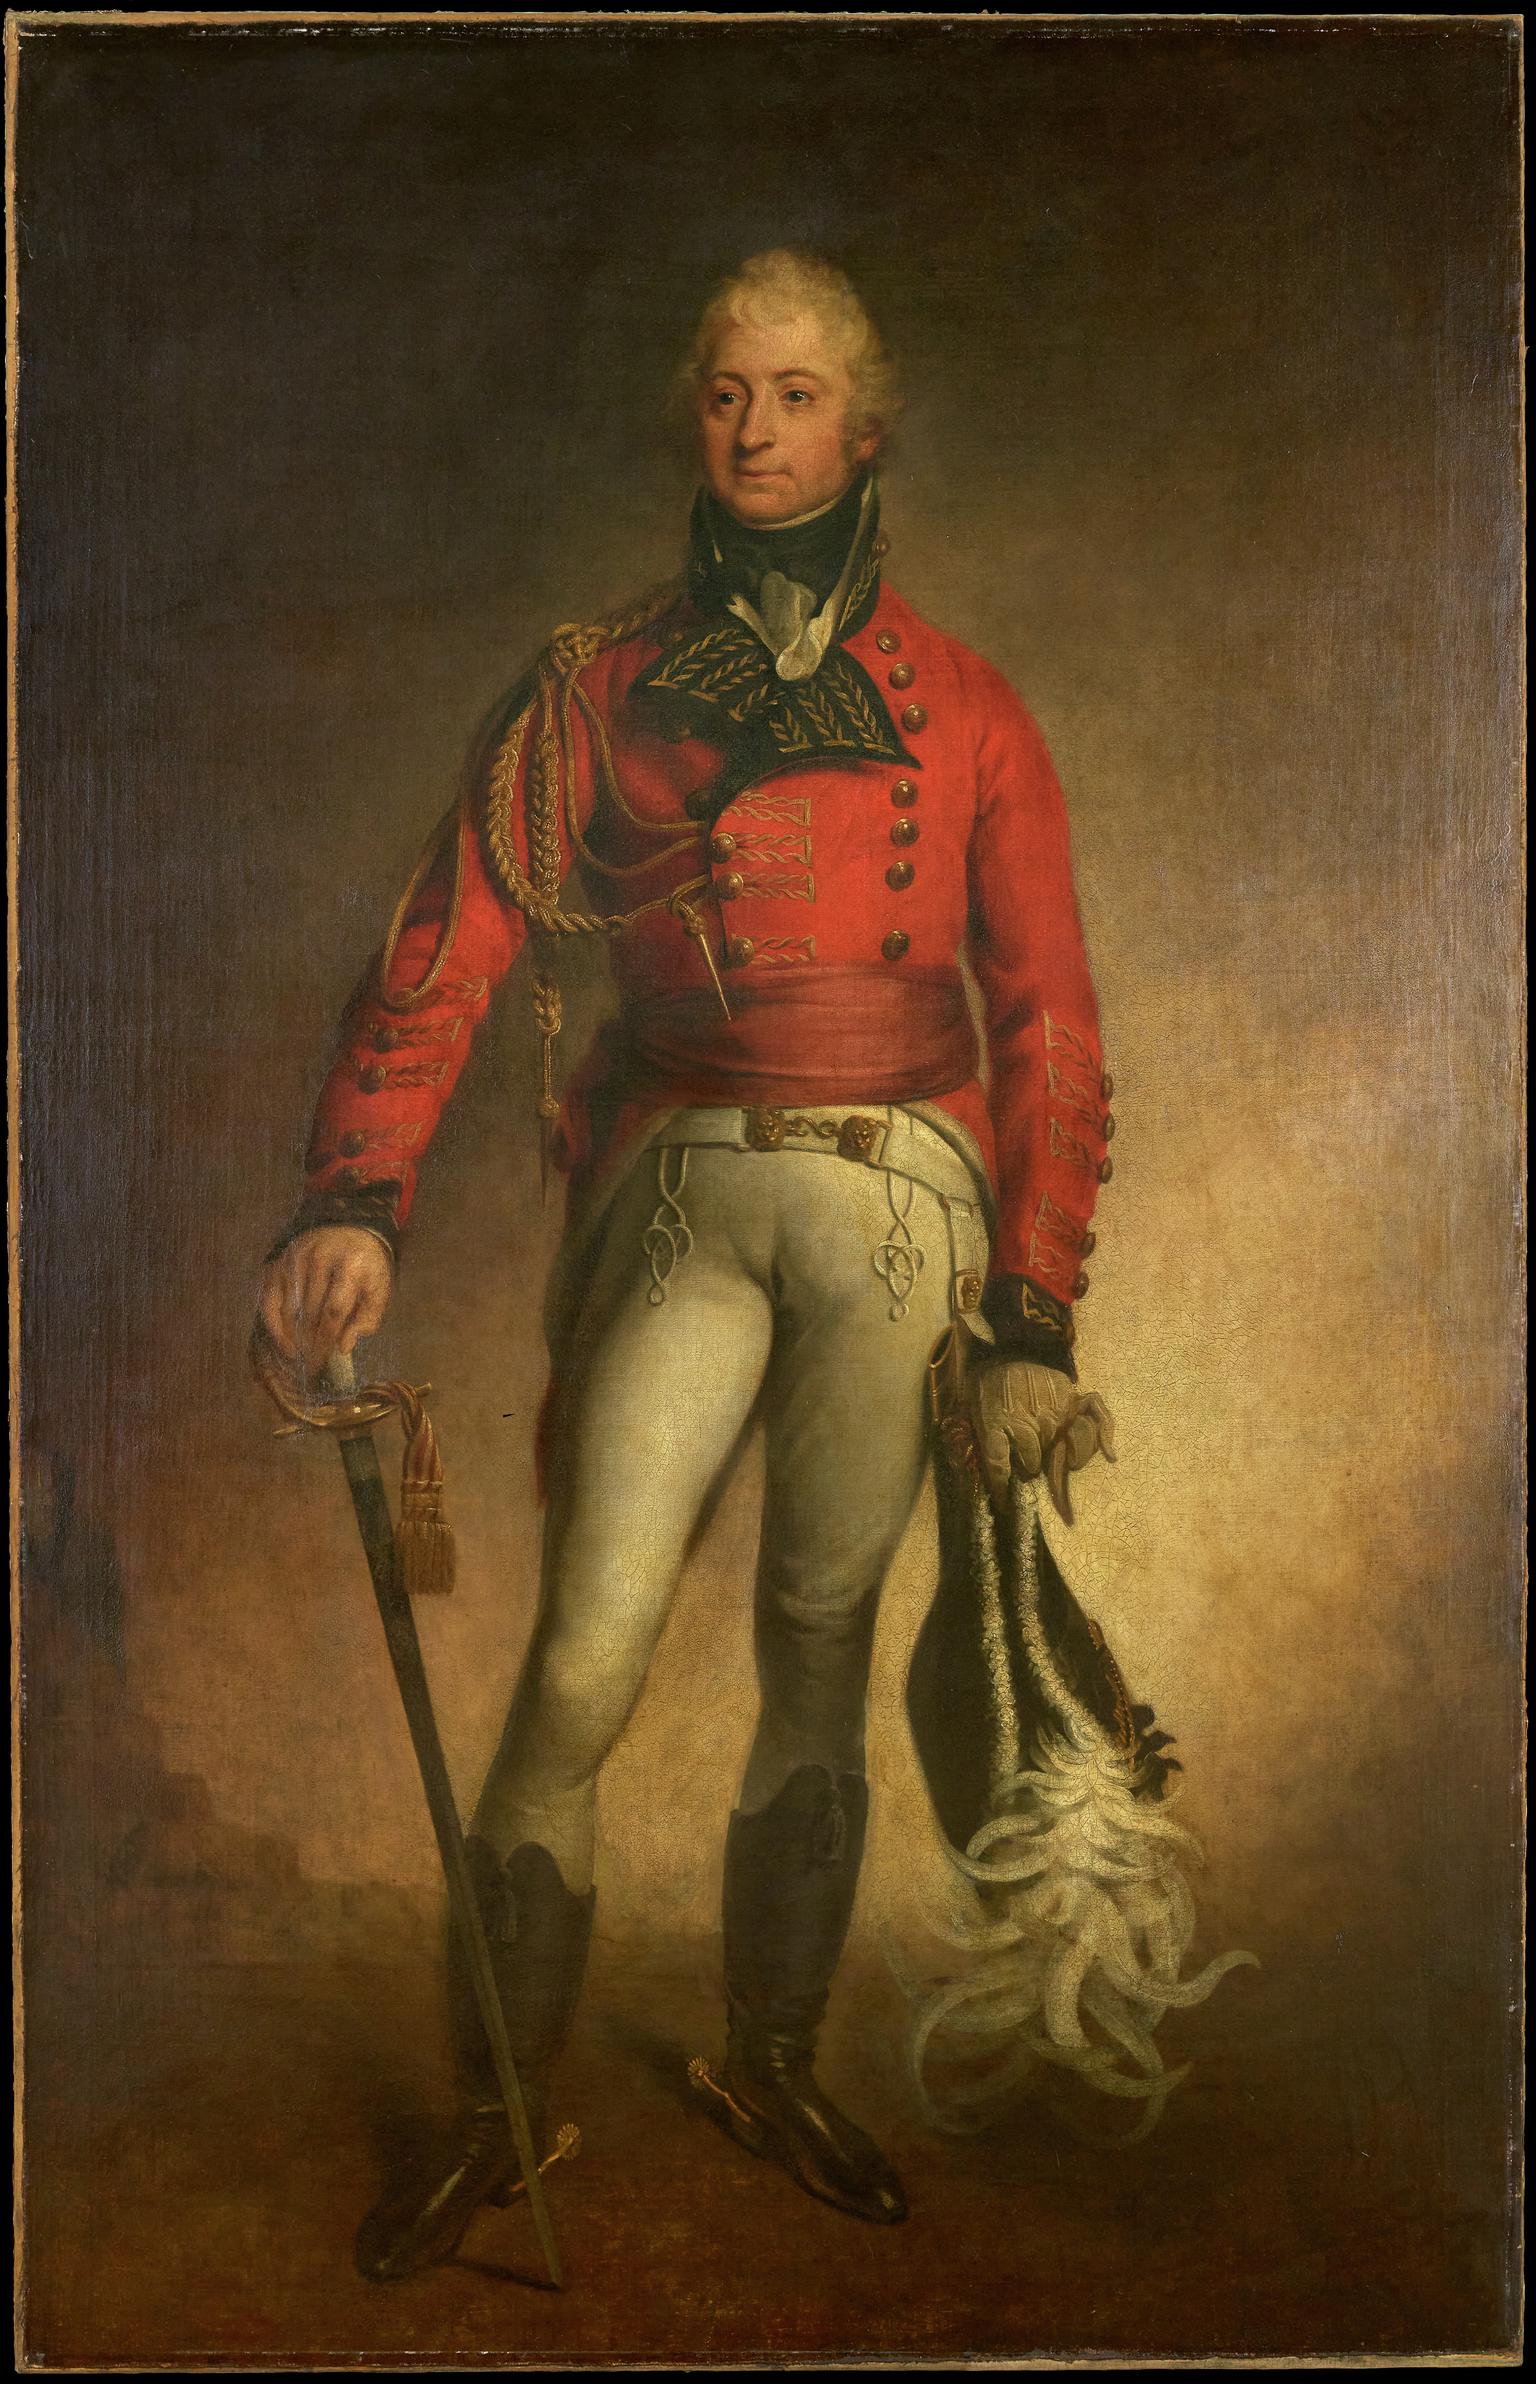 Lieutenant-General Sir Thomas Picton (1758-1815)